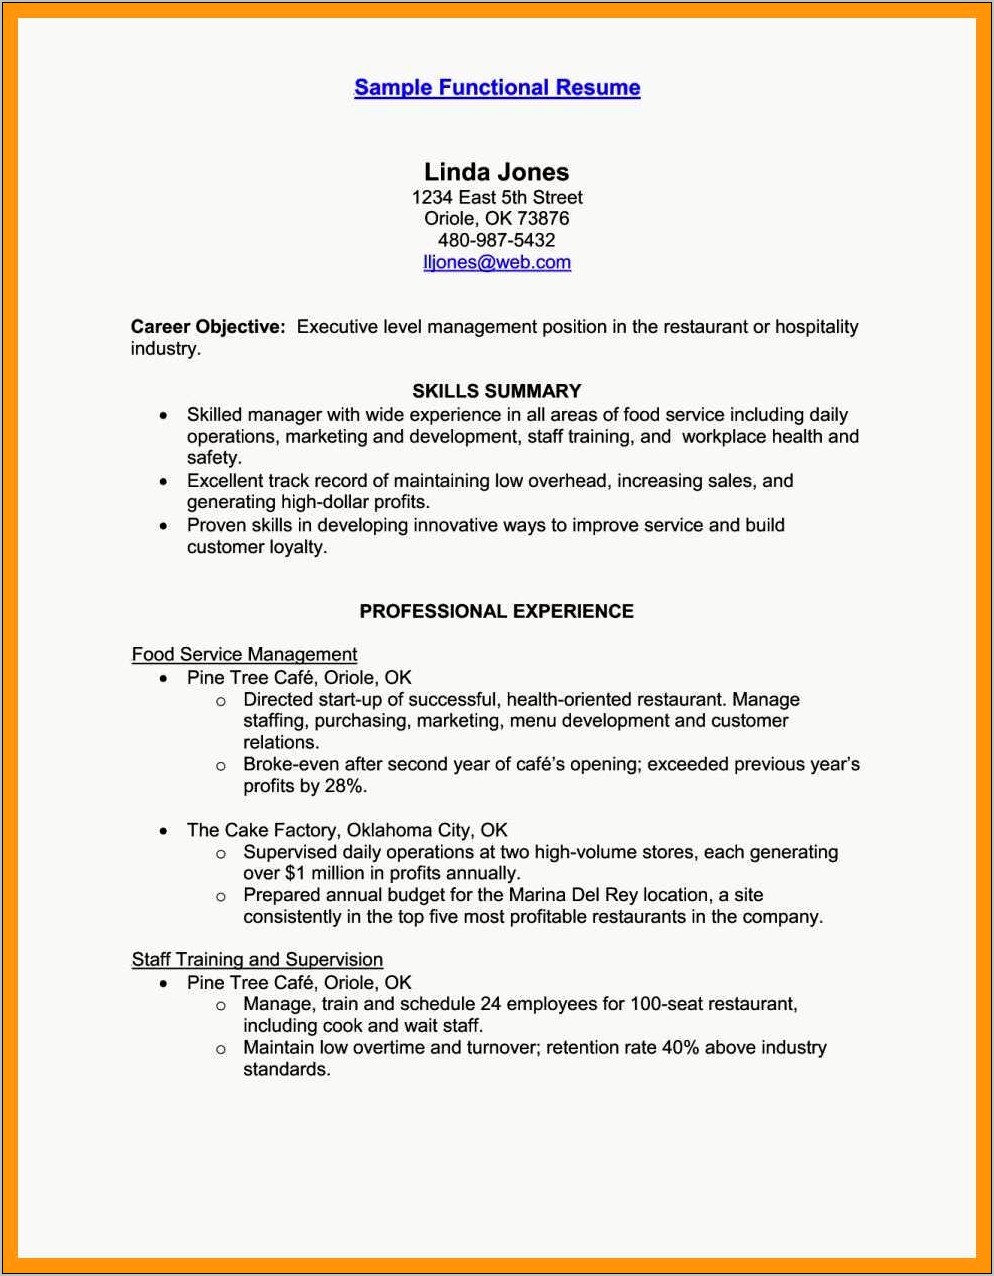 Factory Job Description For Resume